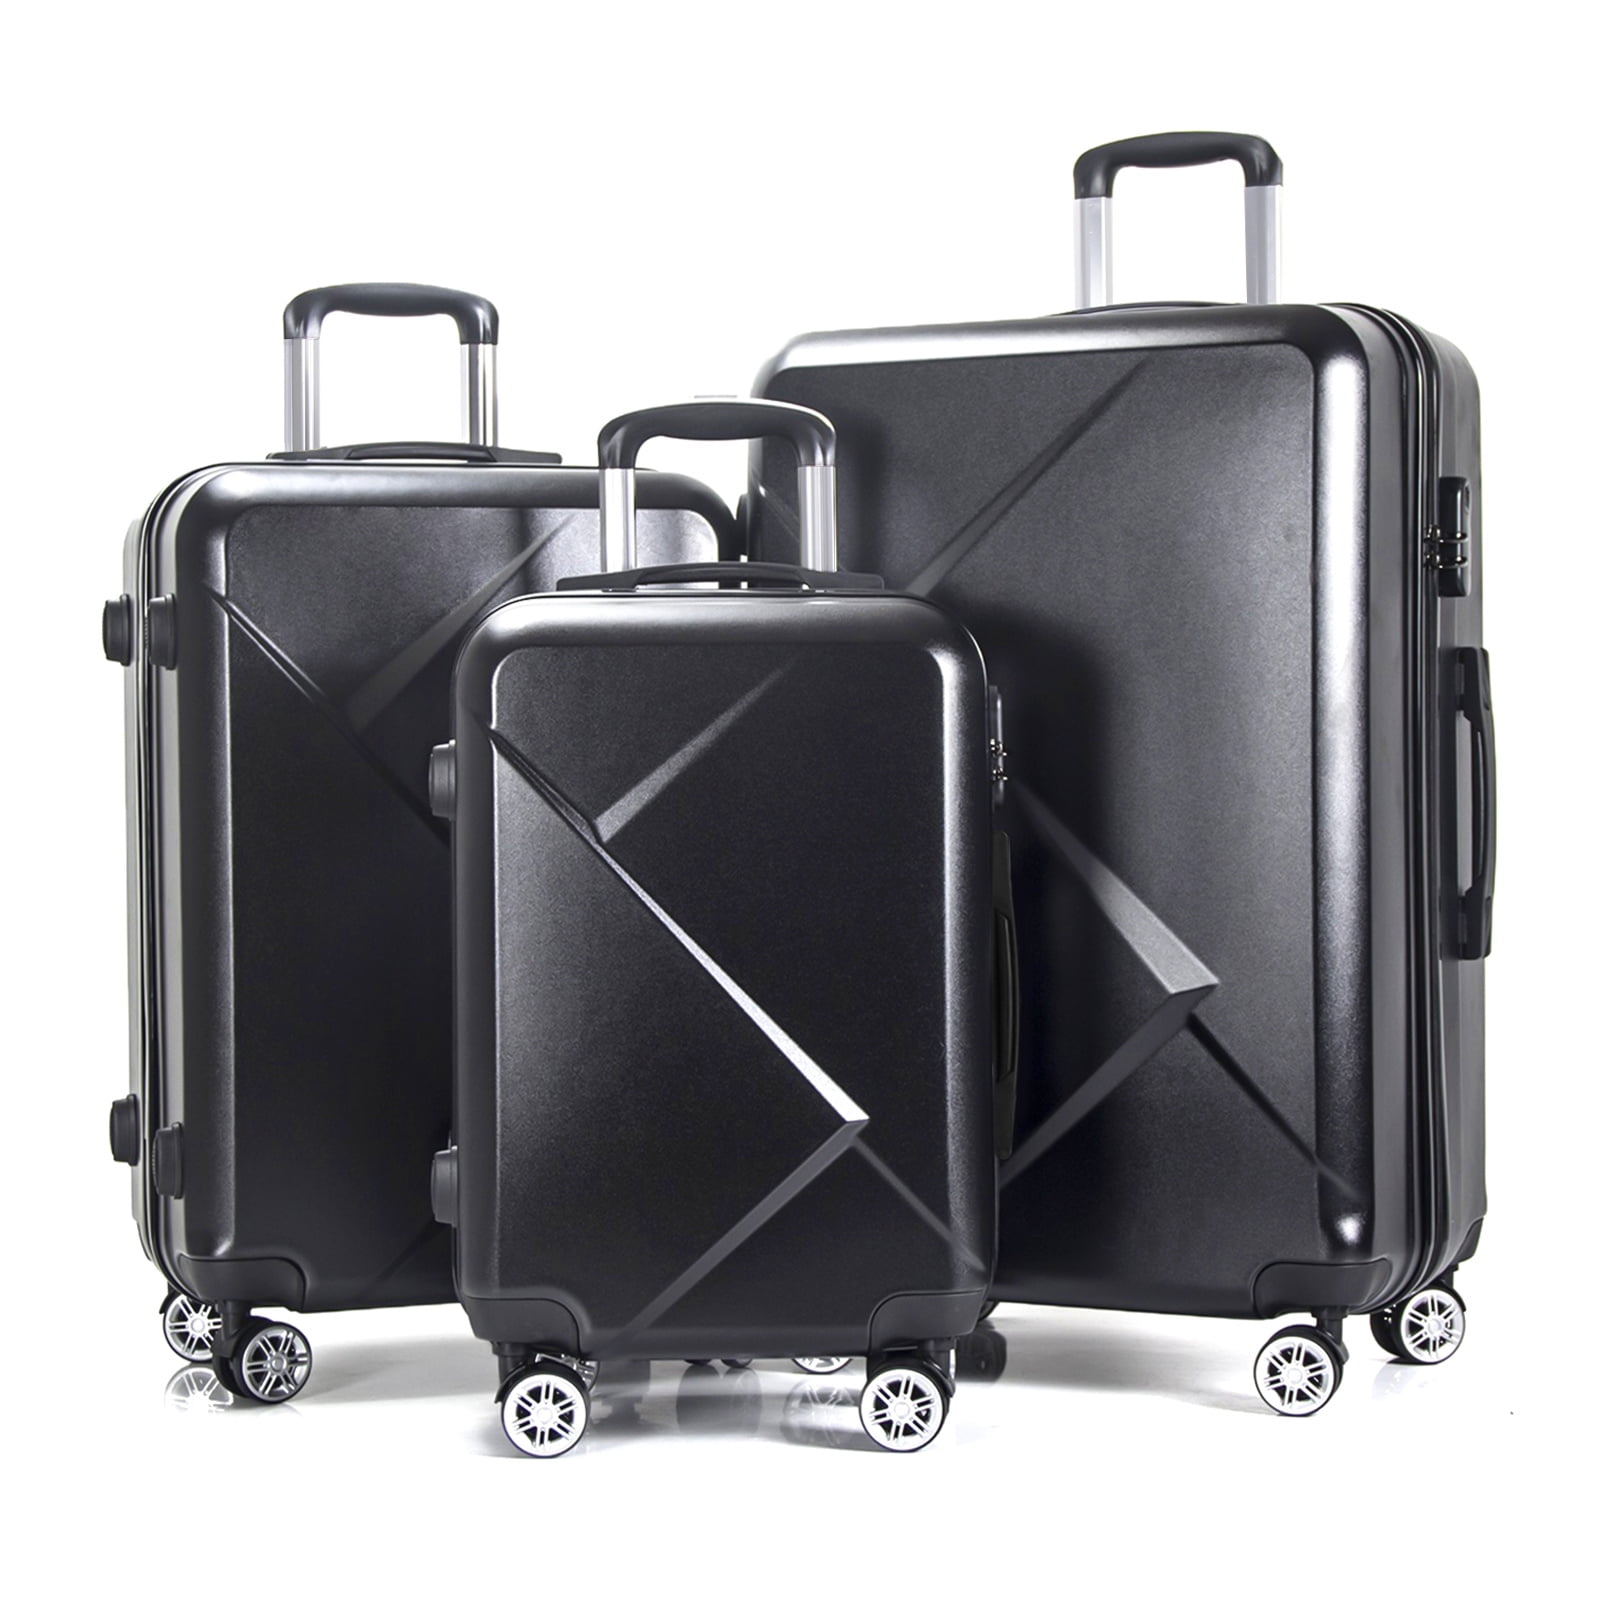 AEDILYS 3 Piece Suitcase Luggage Set